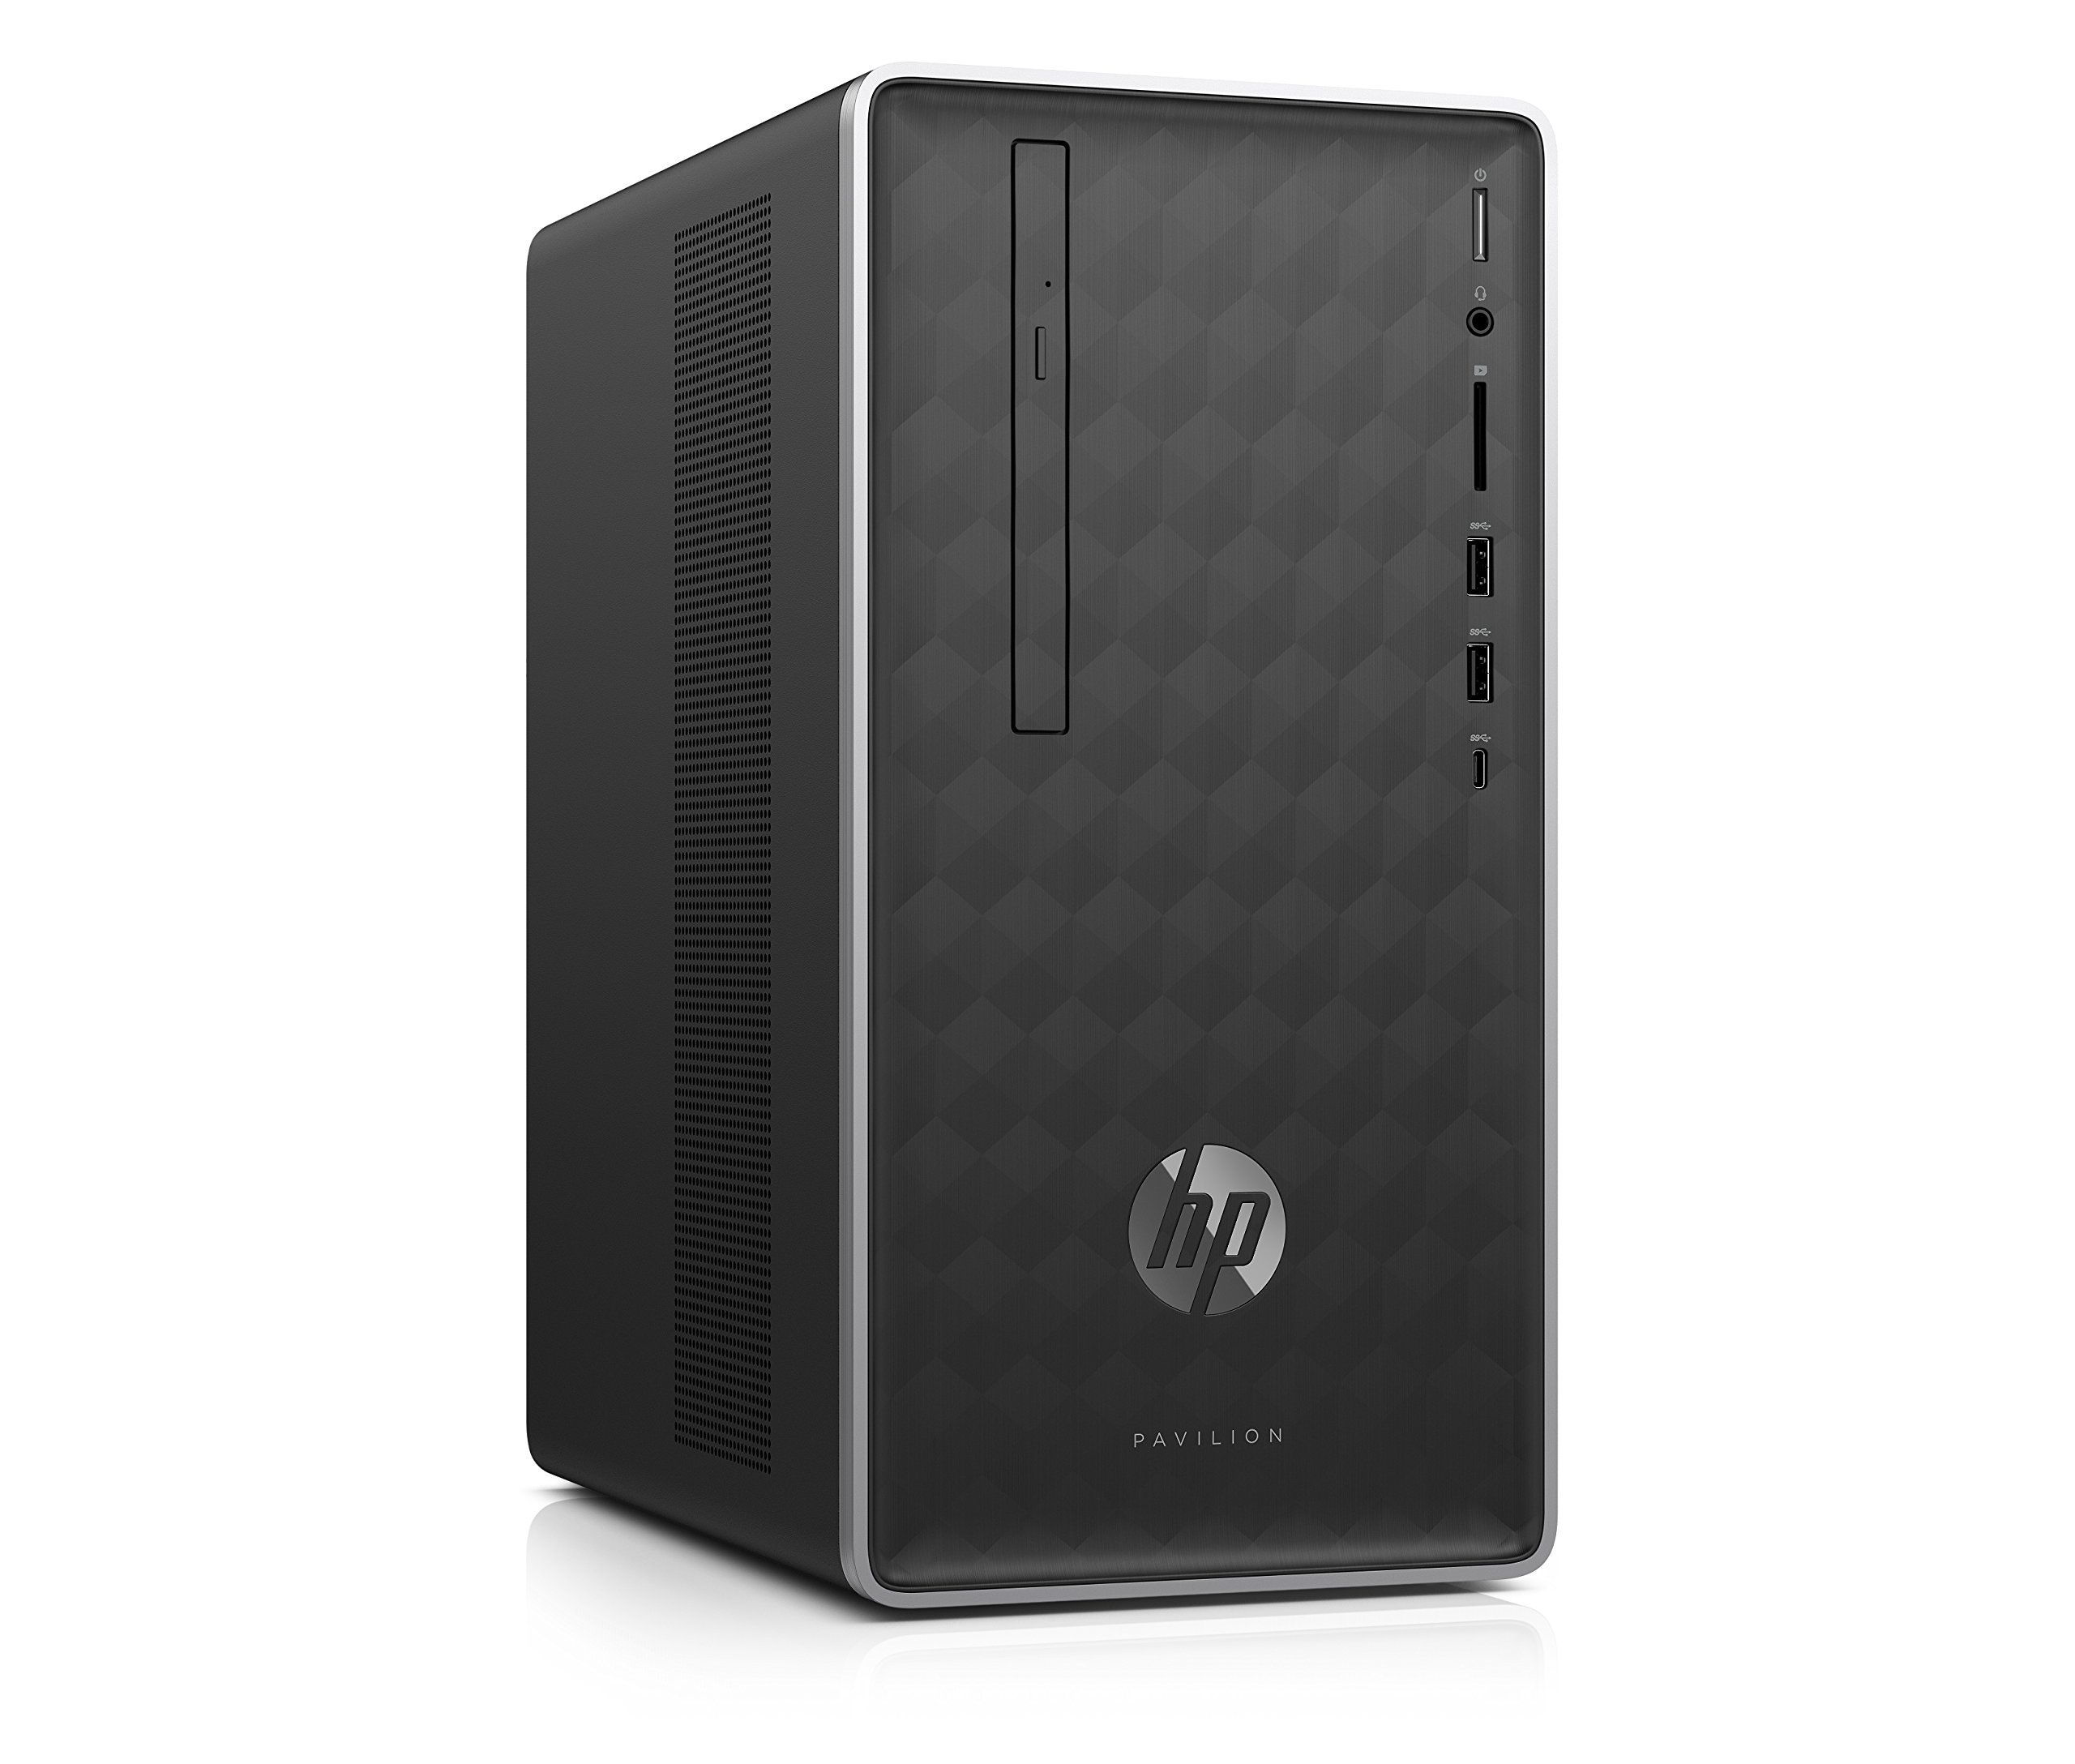 HP 590-p0033w Pavilion Desktop i3-8100 3.6GHz 4GB RAM 1TB HDD Win 10 Home Ash Silver